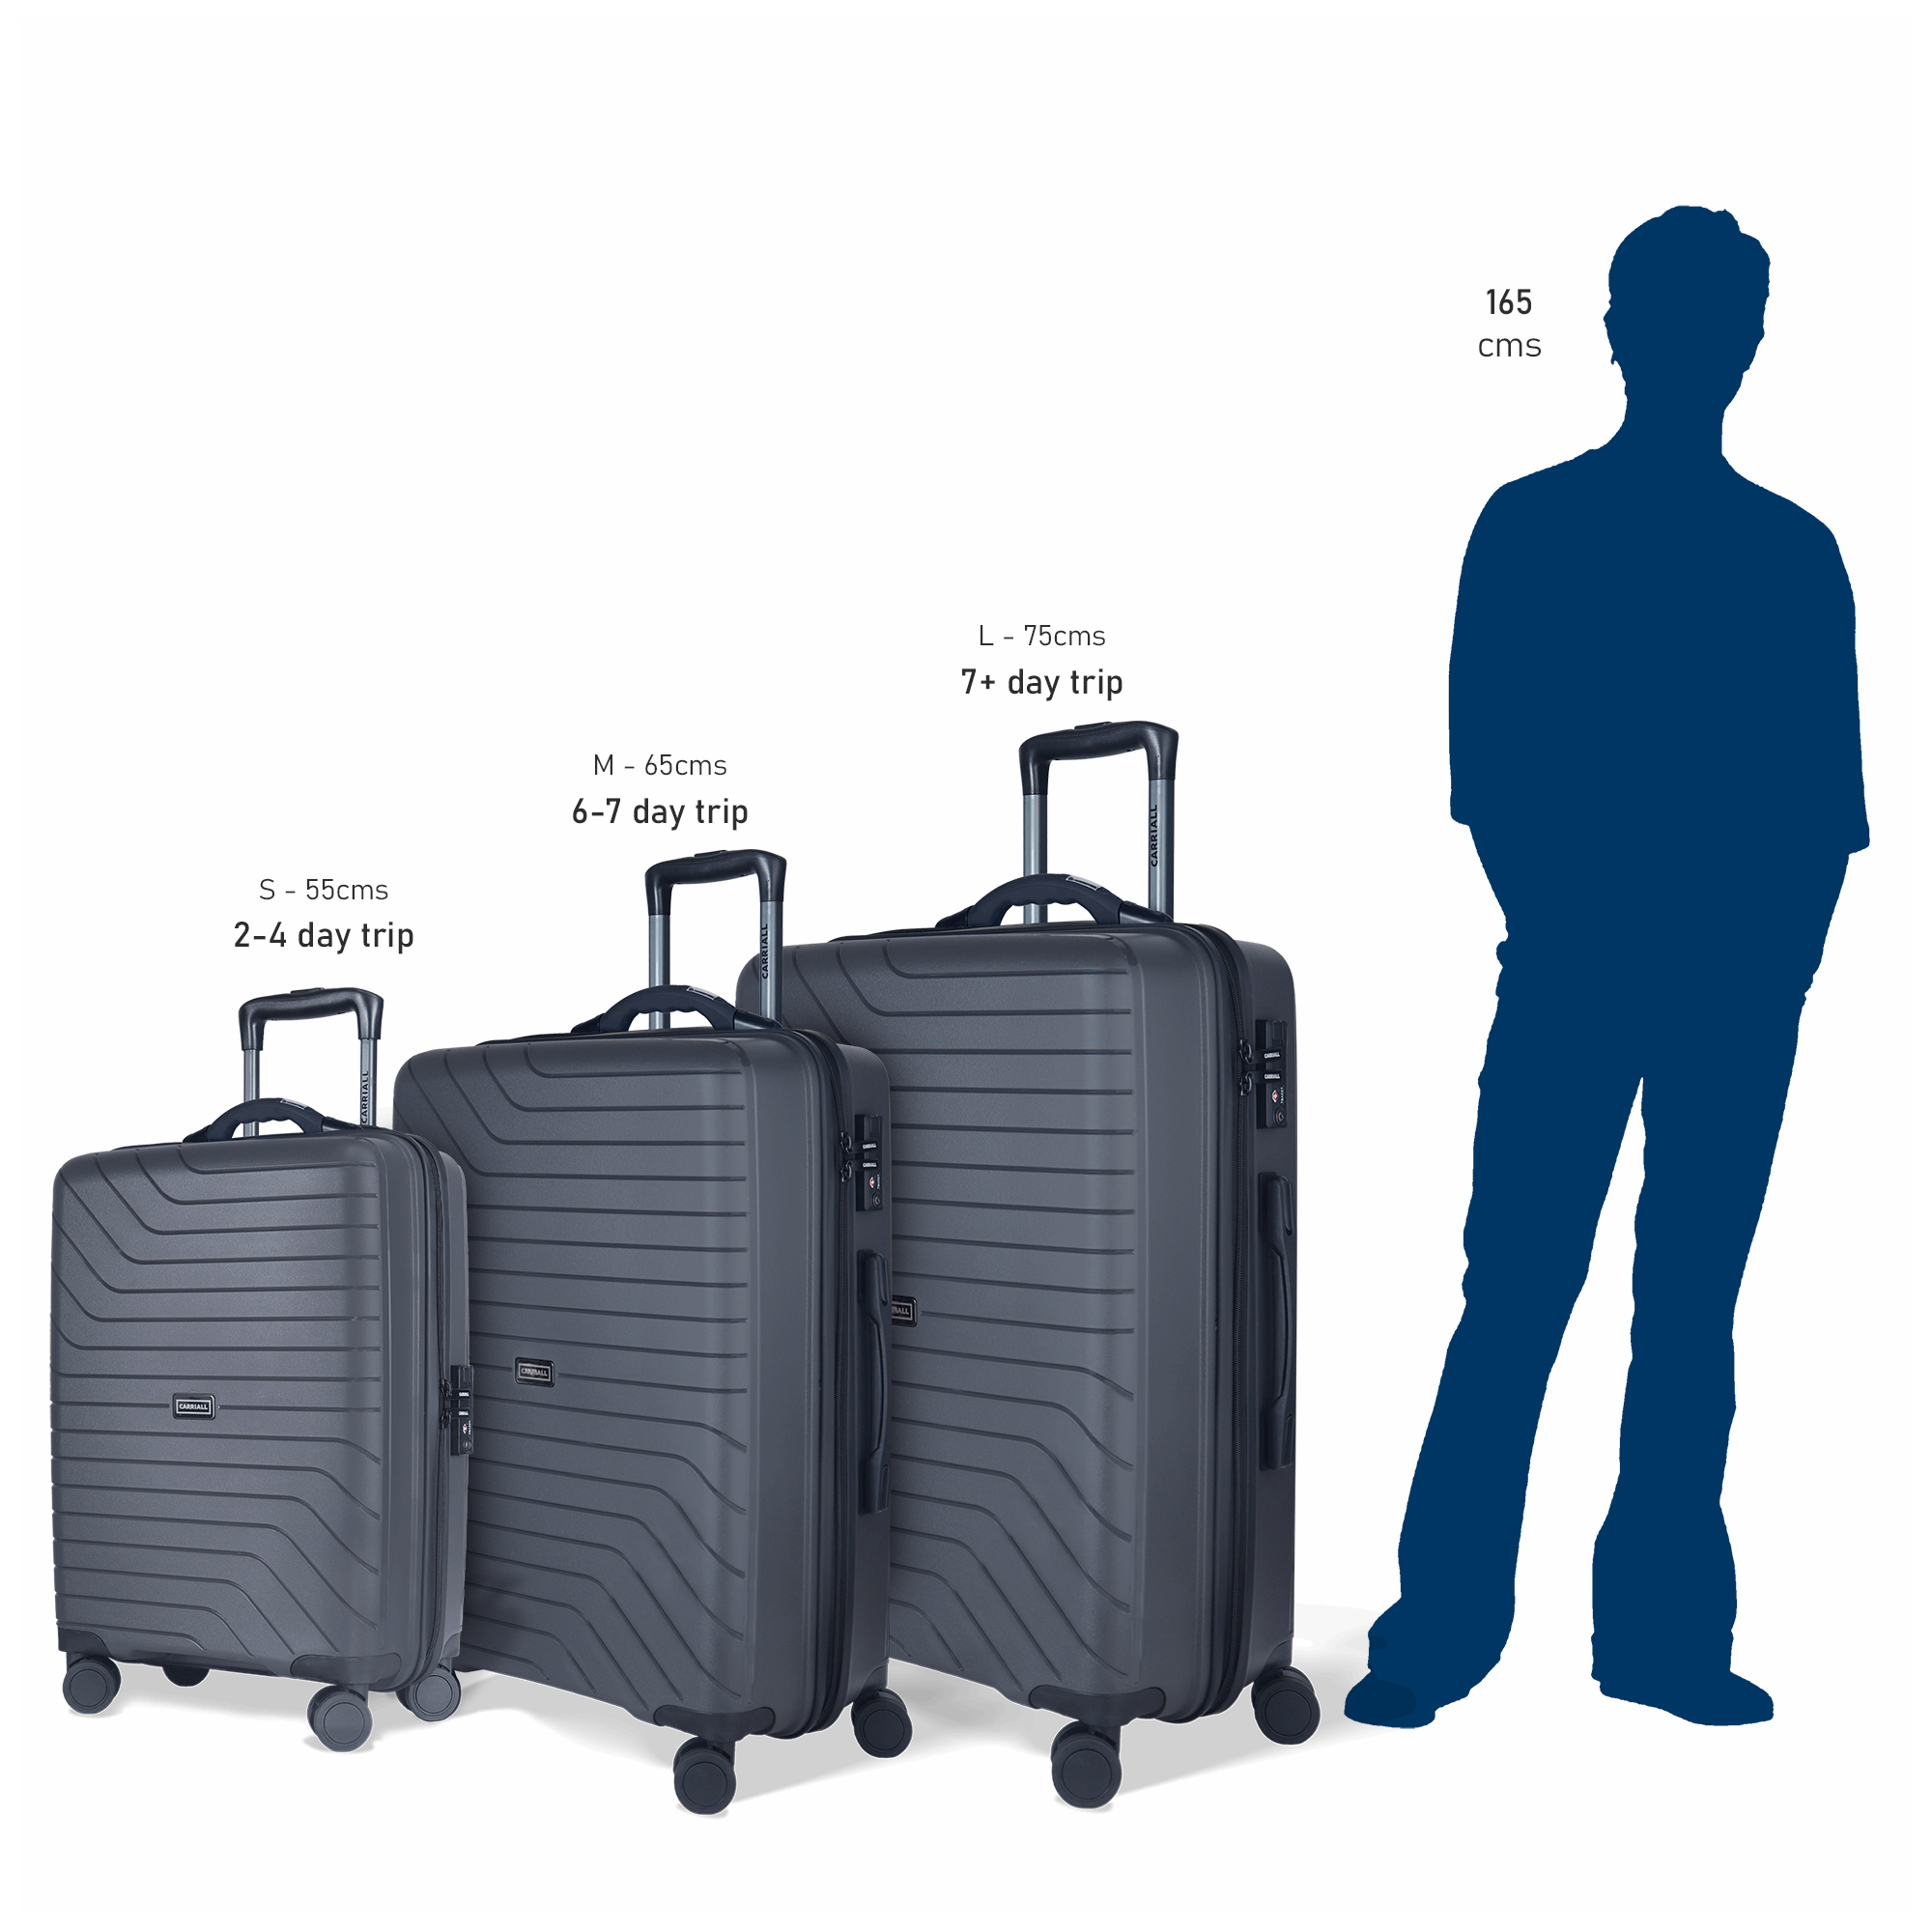 Luggage Trolley offers, Travel Luggage